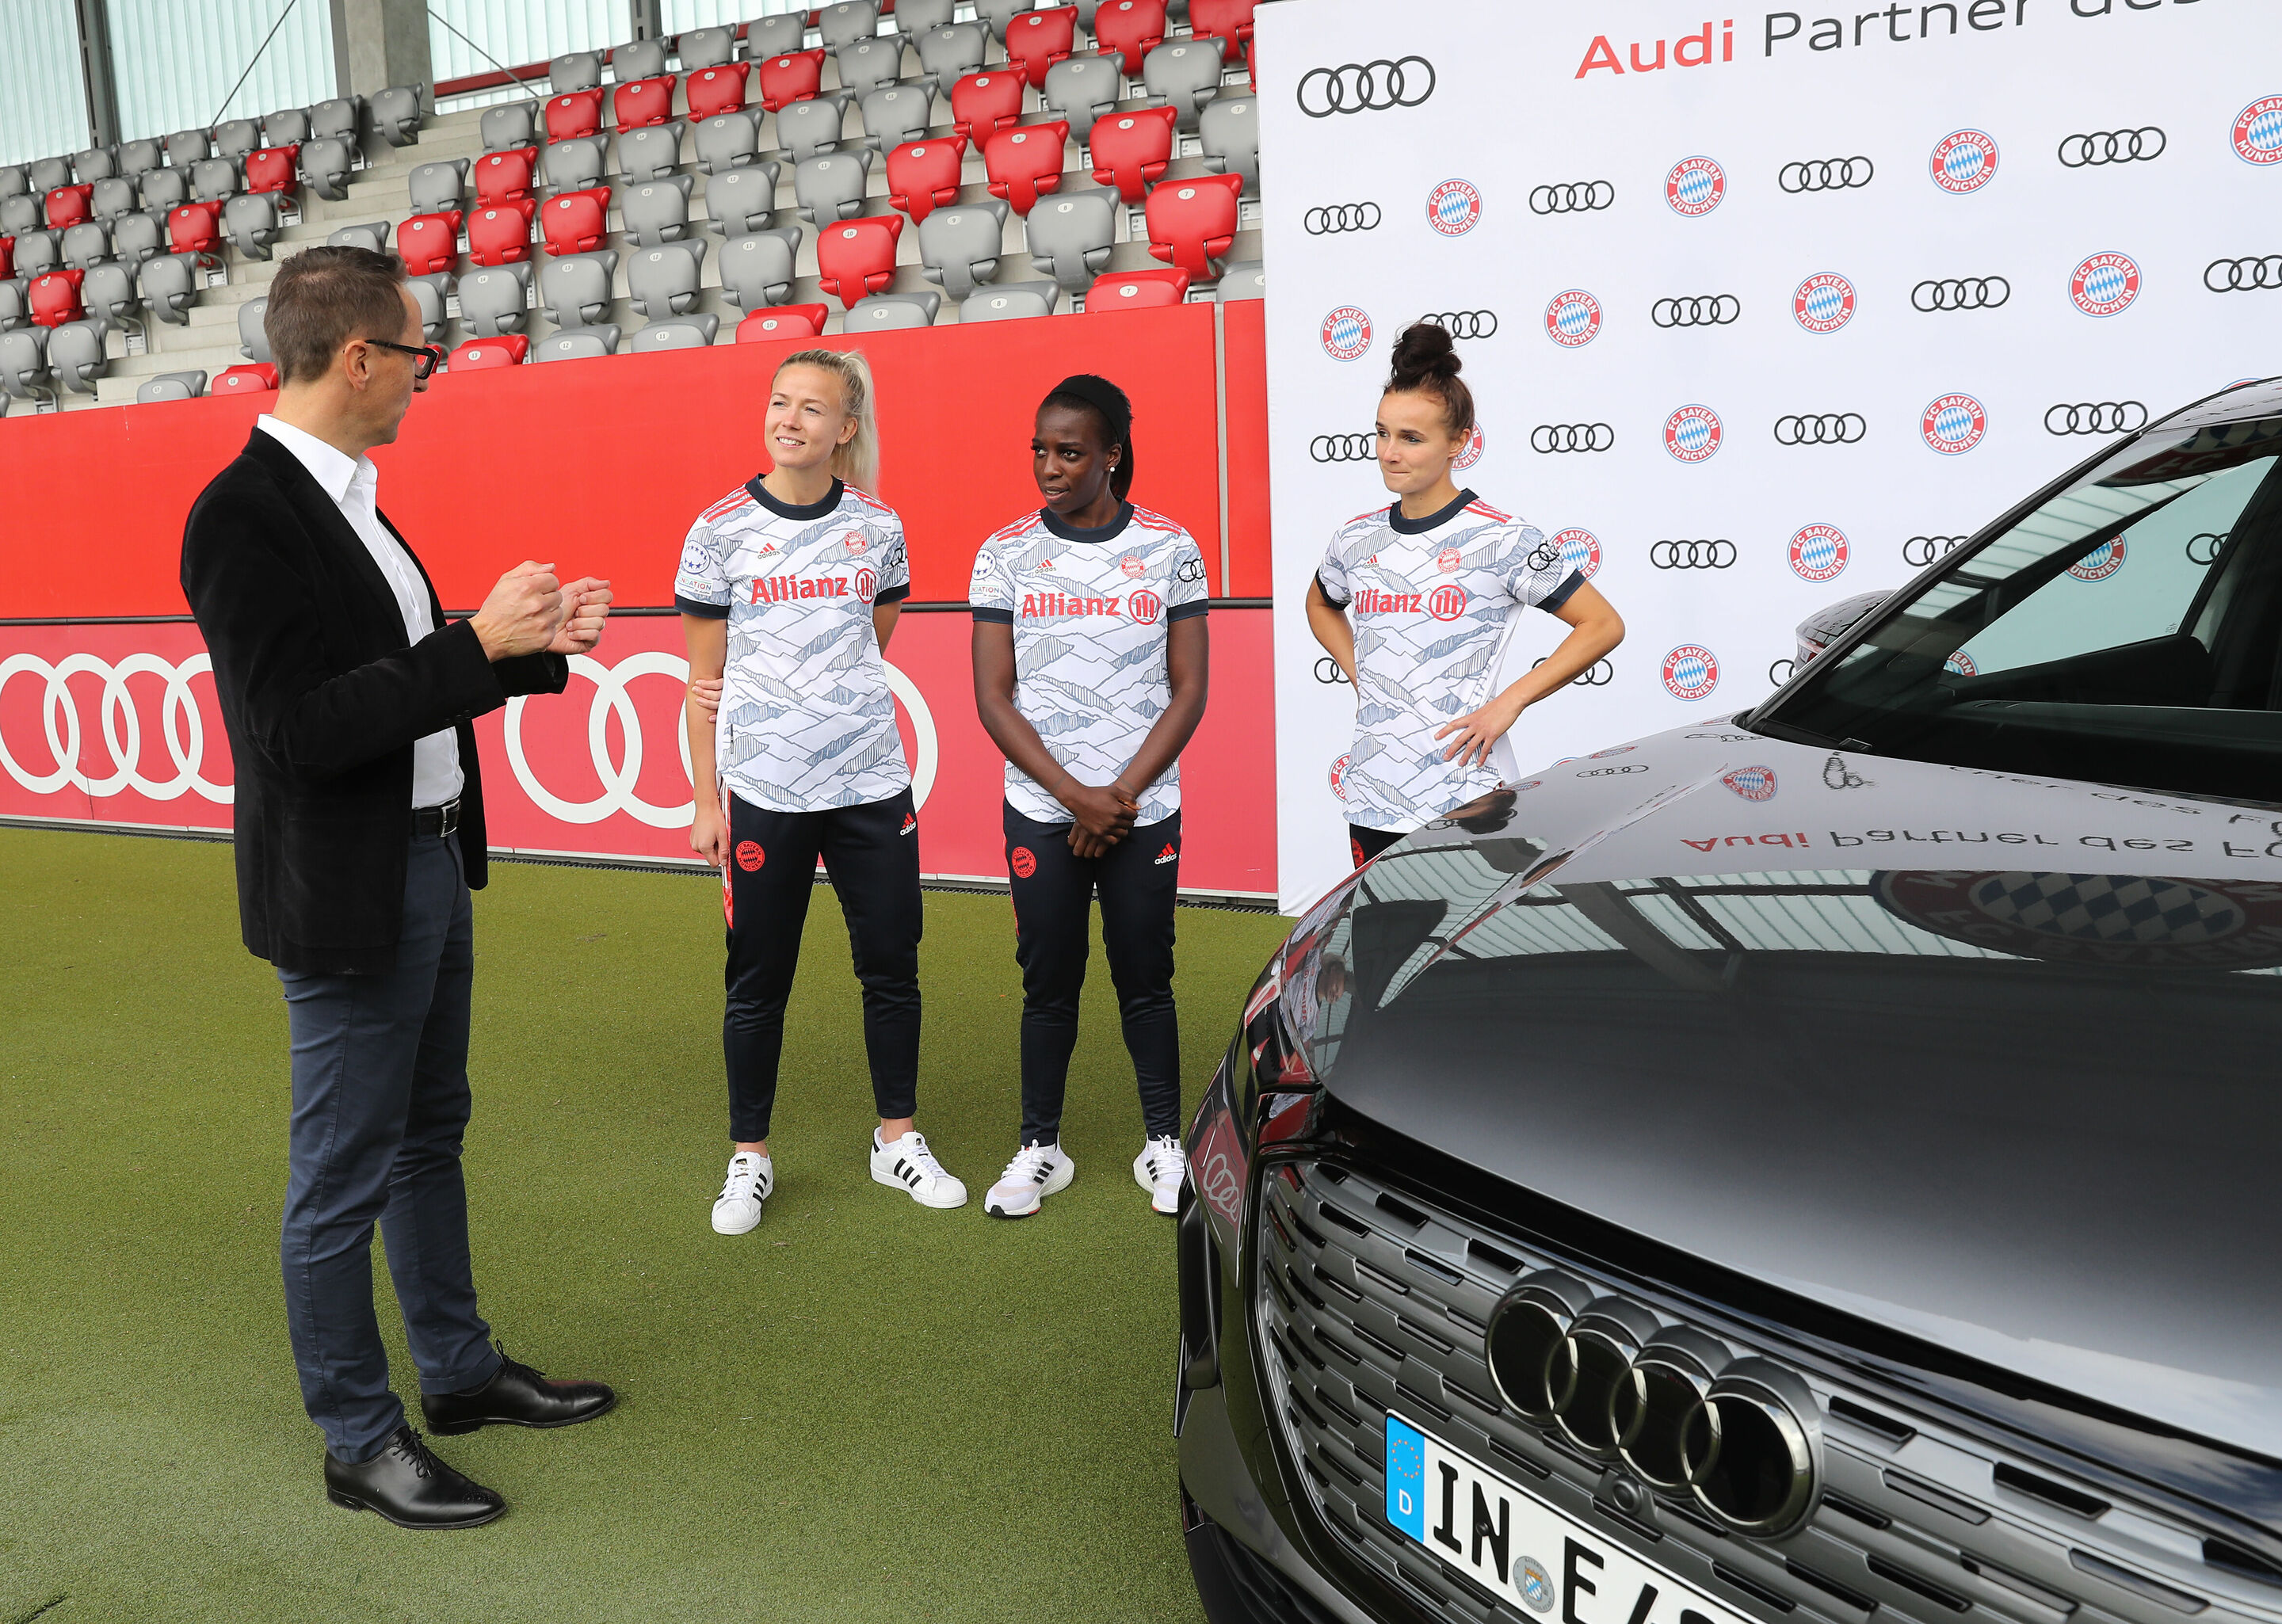 Audi becomes a partner of women’s soccer at FC Bayern Munich